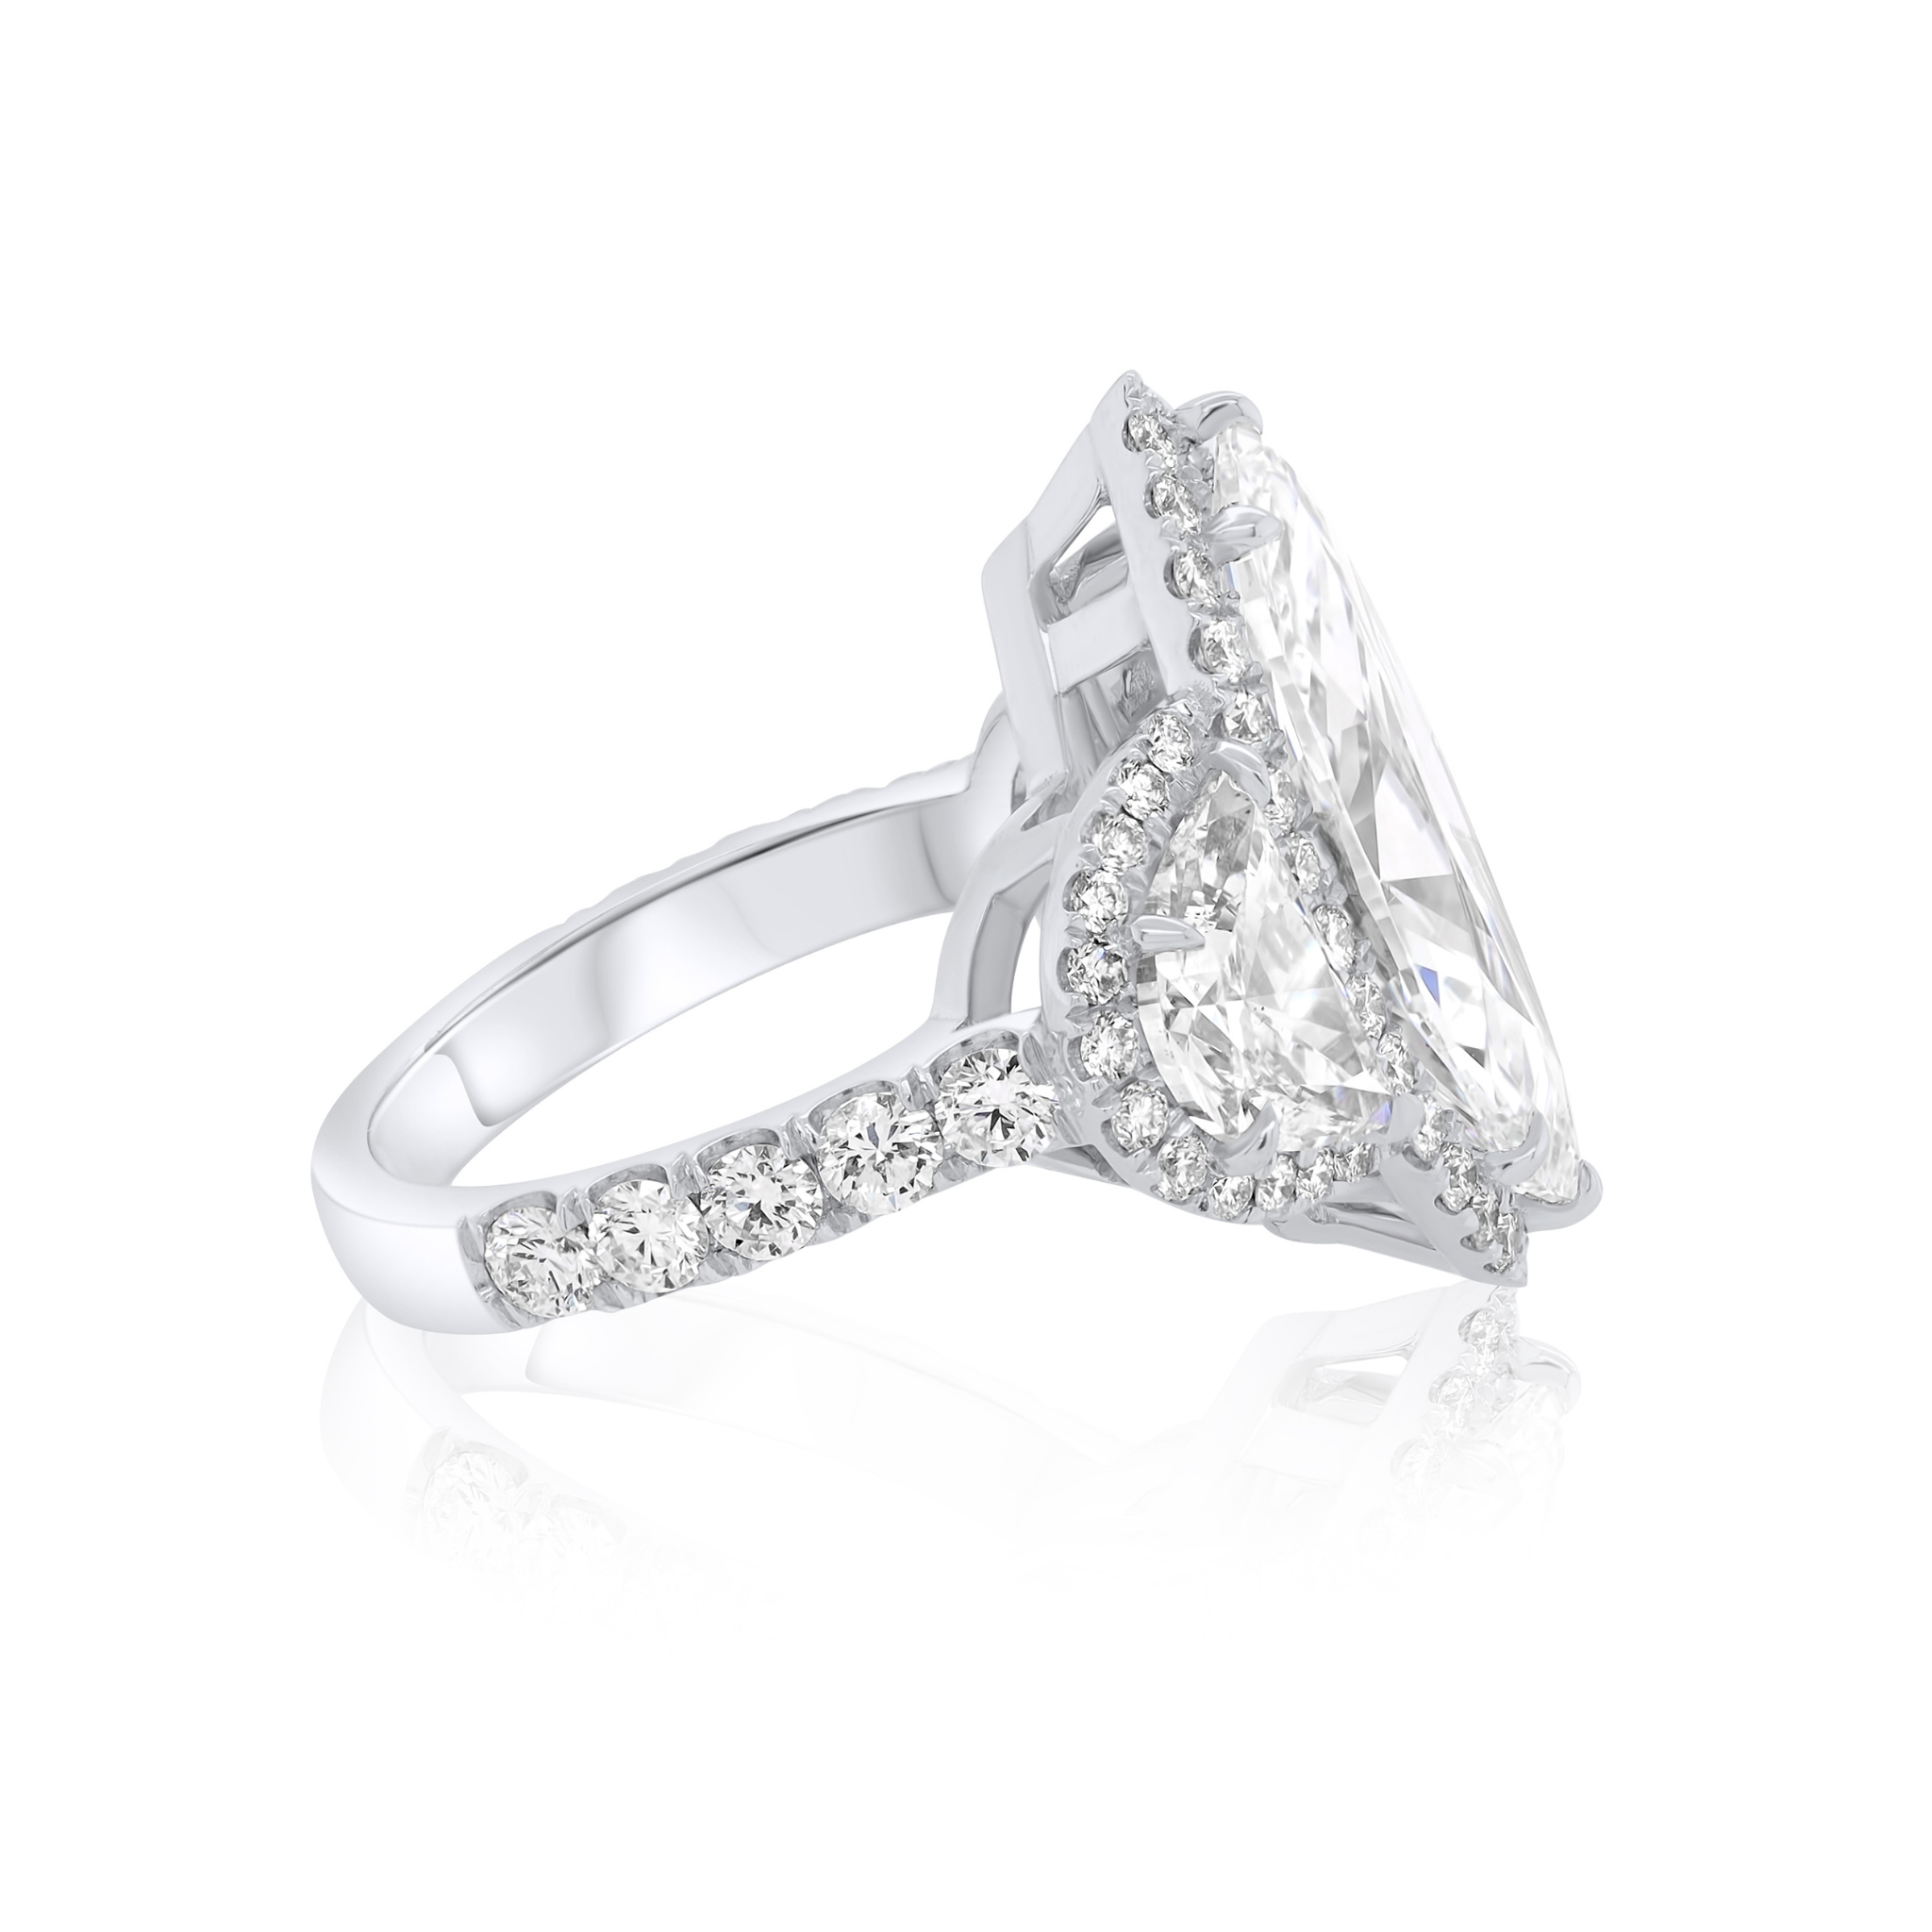 5.56ct Marquise Diamond Ring.jpg